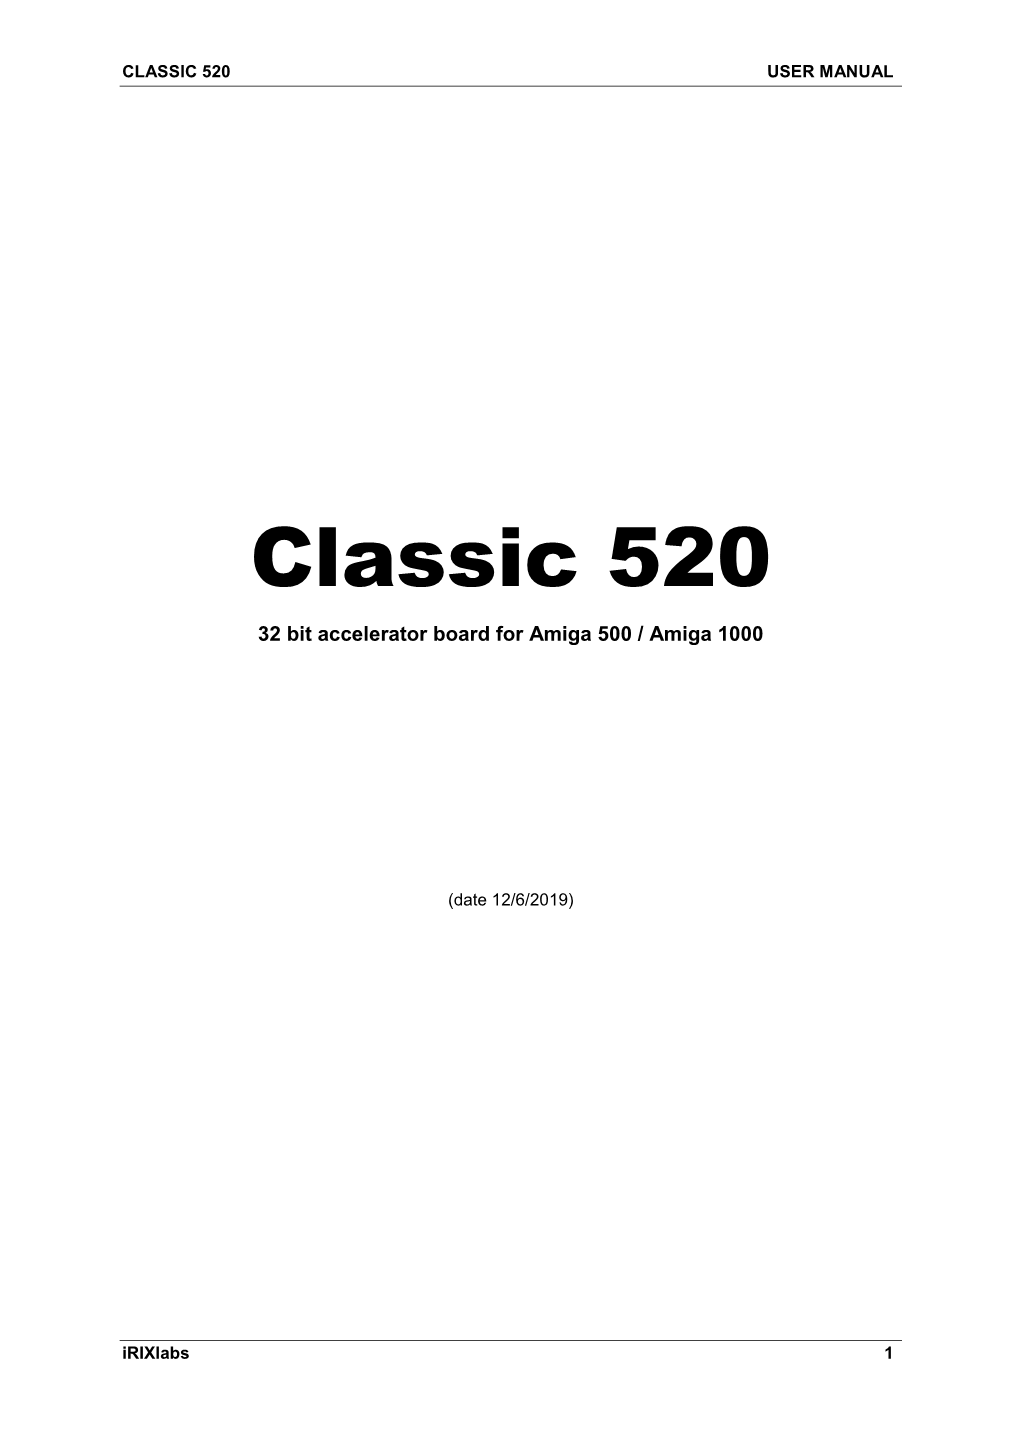 Classic 520 User Manual